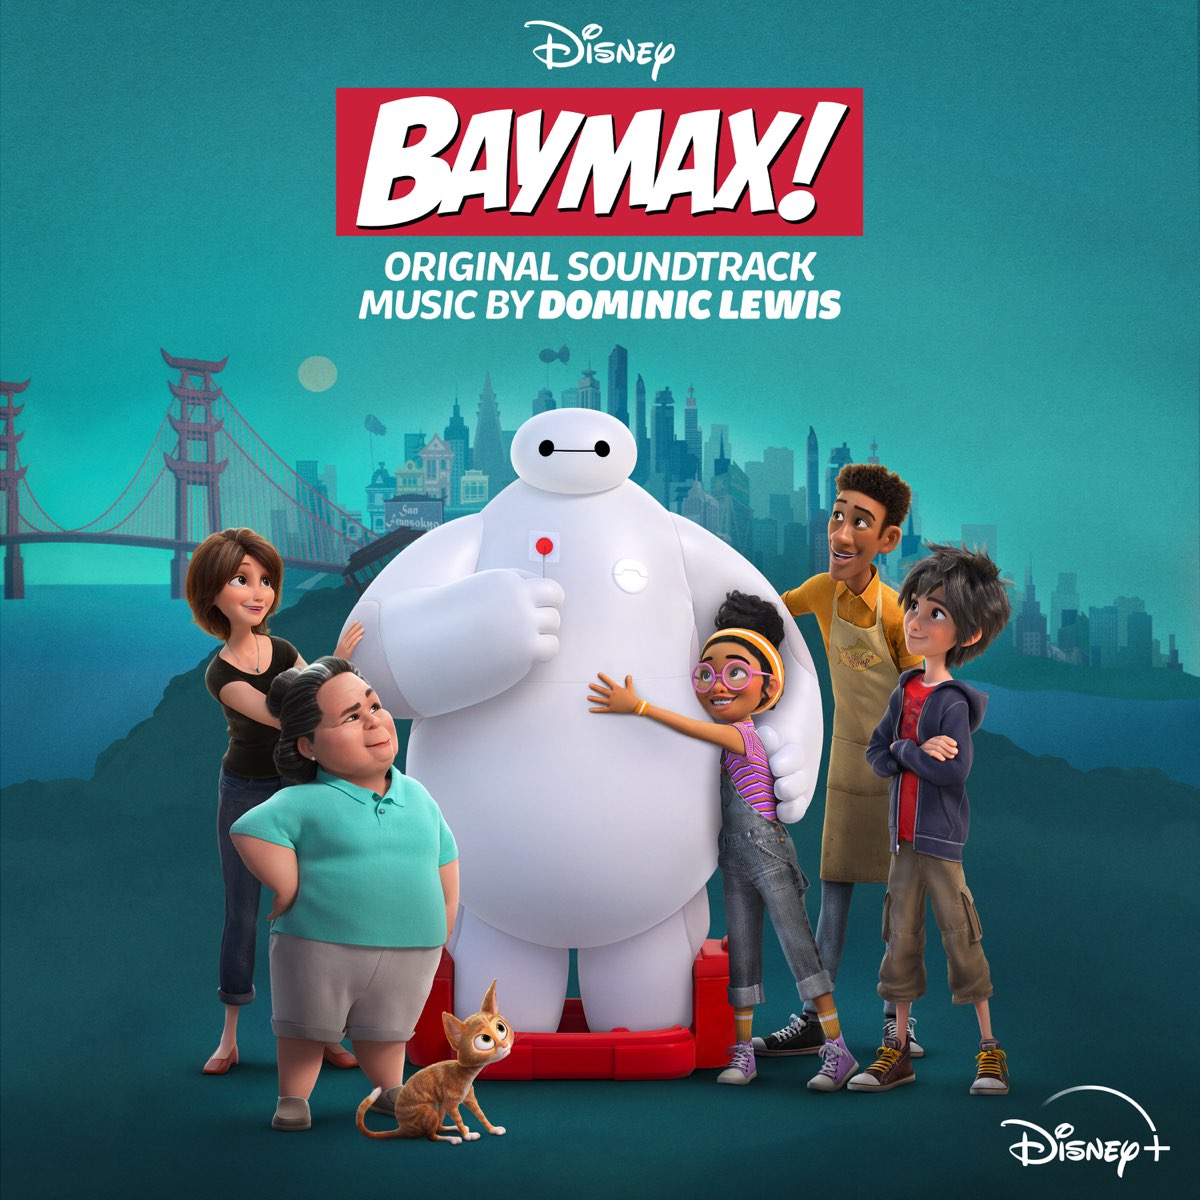 Dominic Lewis Baymax! (Original Soundtrack) cover artwork